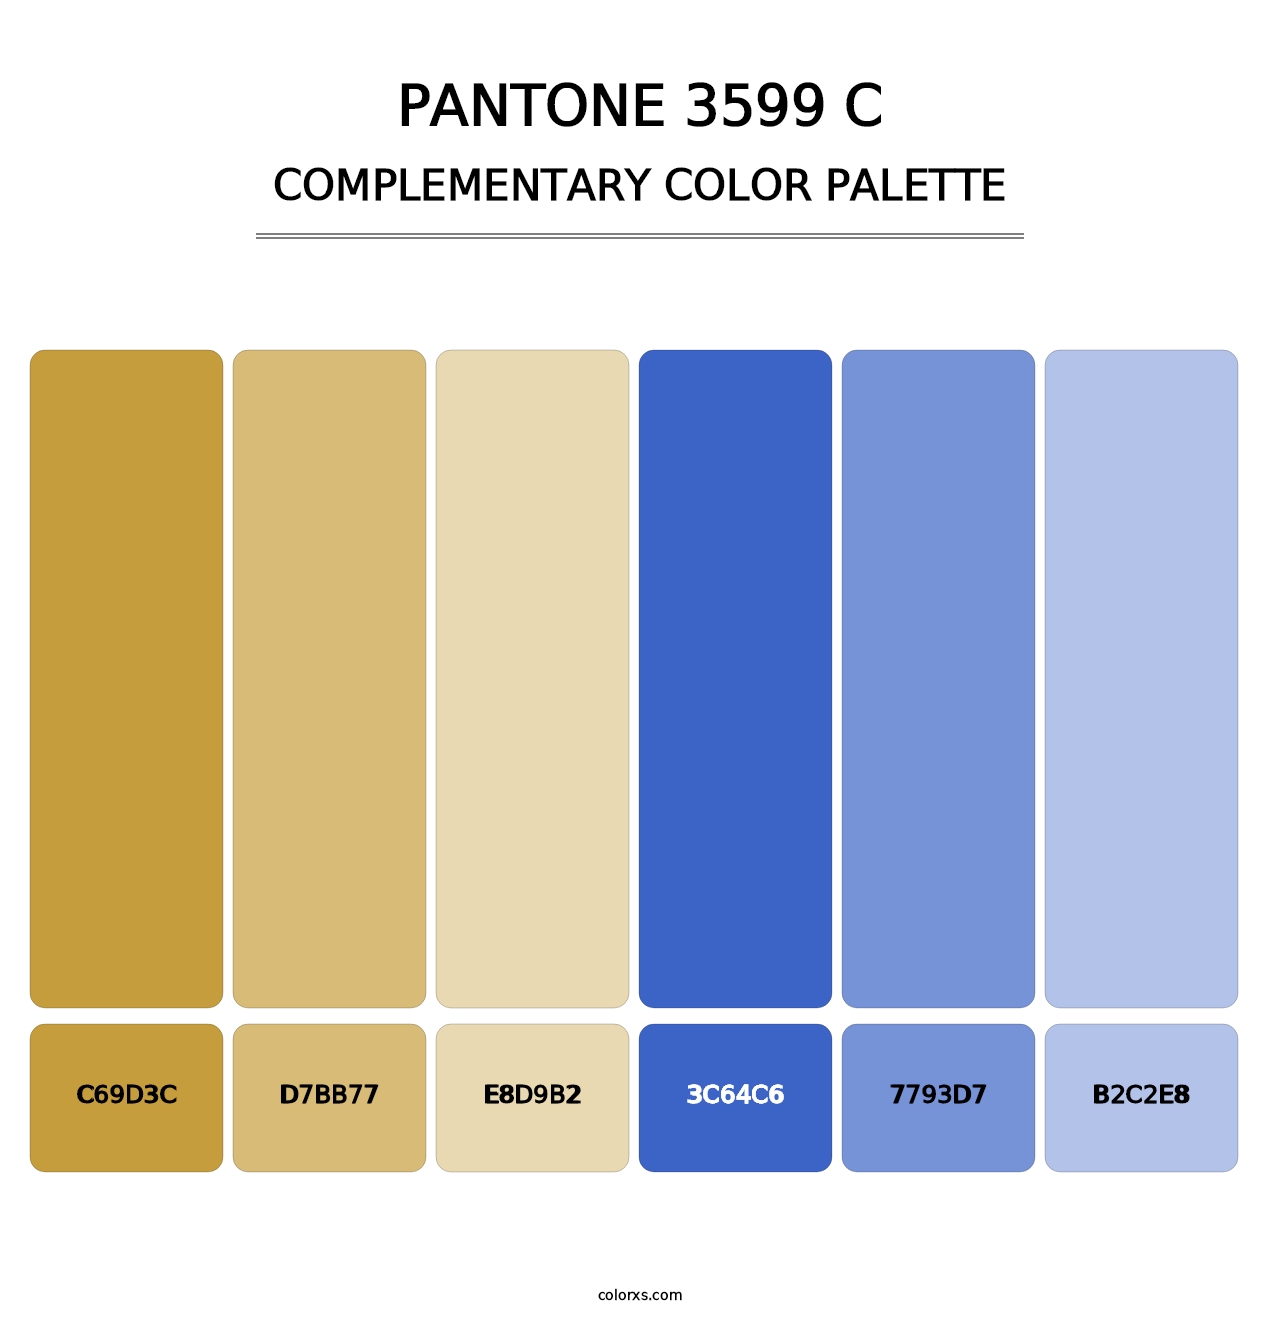 PANTONE 3599 C - Complementary Color Palette